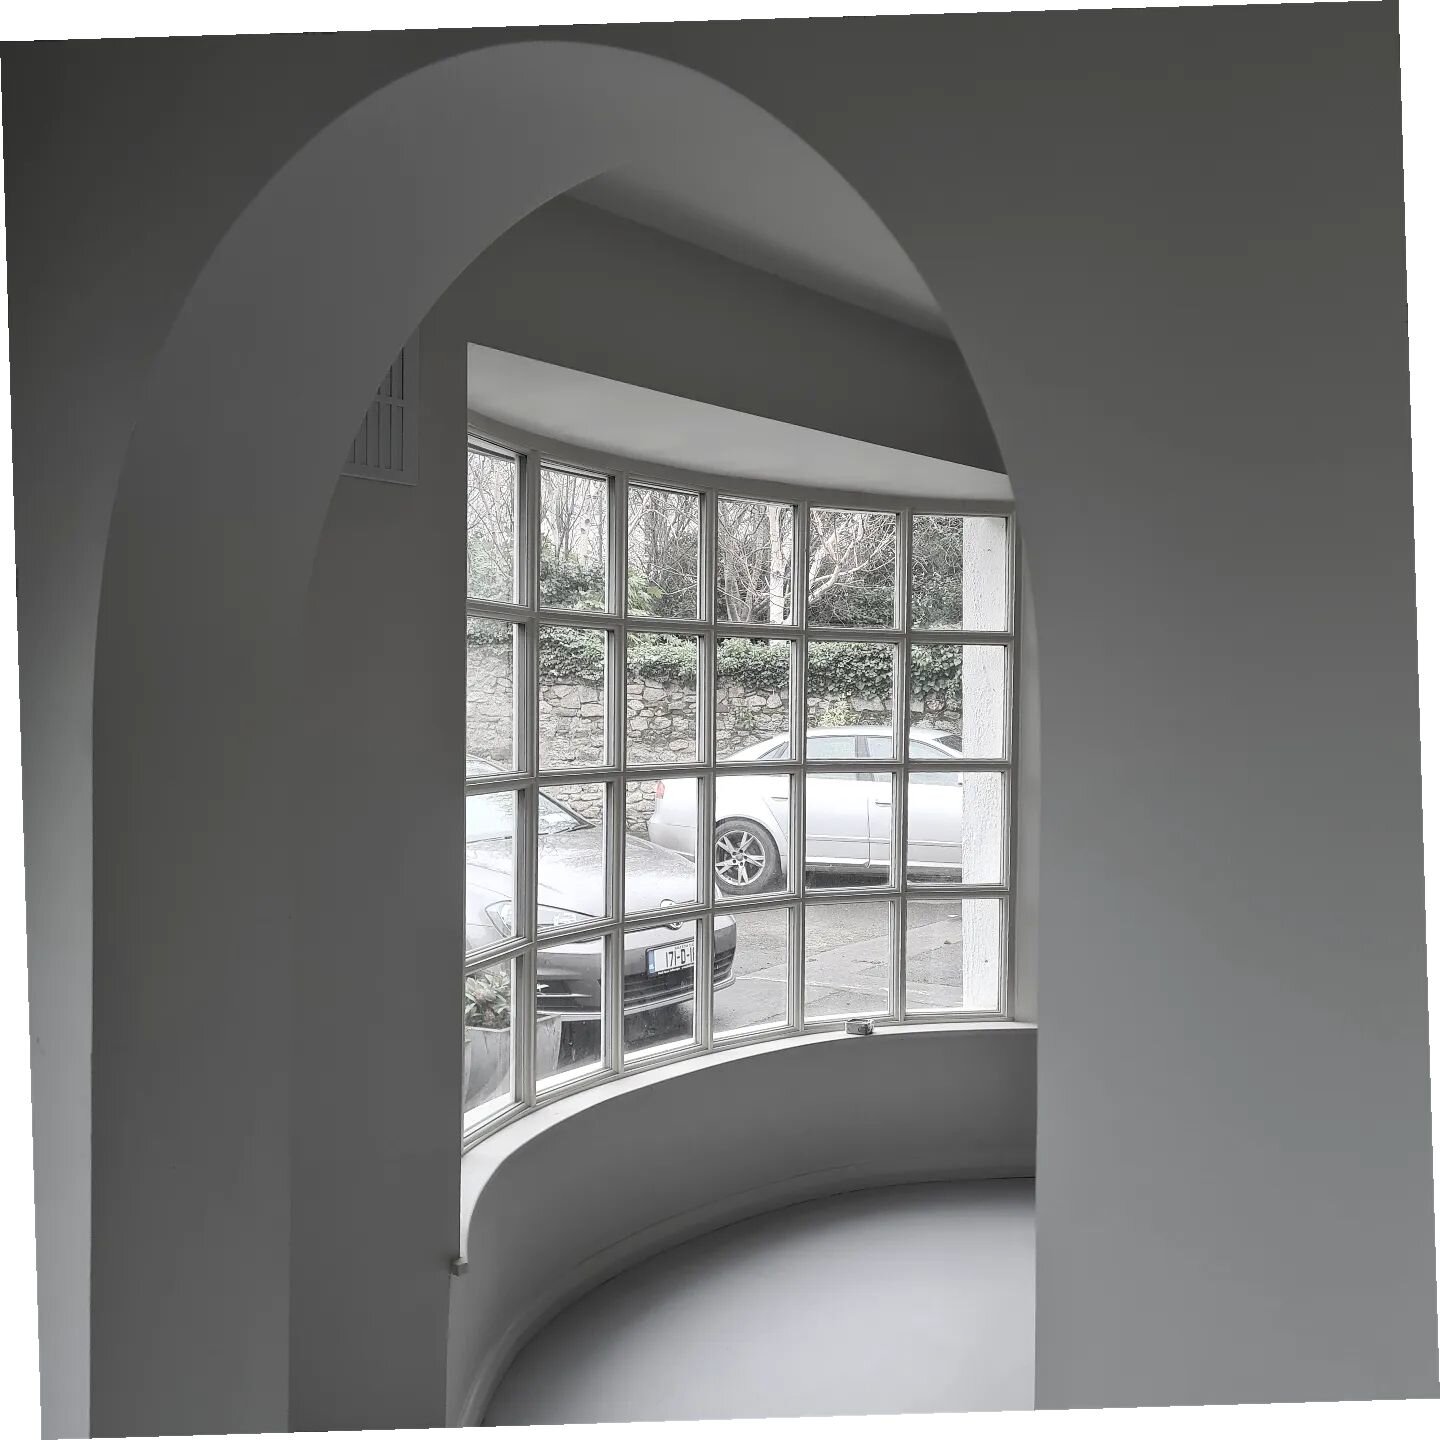 Curves for days ➰️ #midcenturyminimalism #marmoleum #arch #mewshousemakeover #interiordesigndream #dublinreno #marmoleum